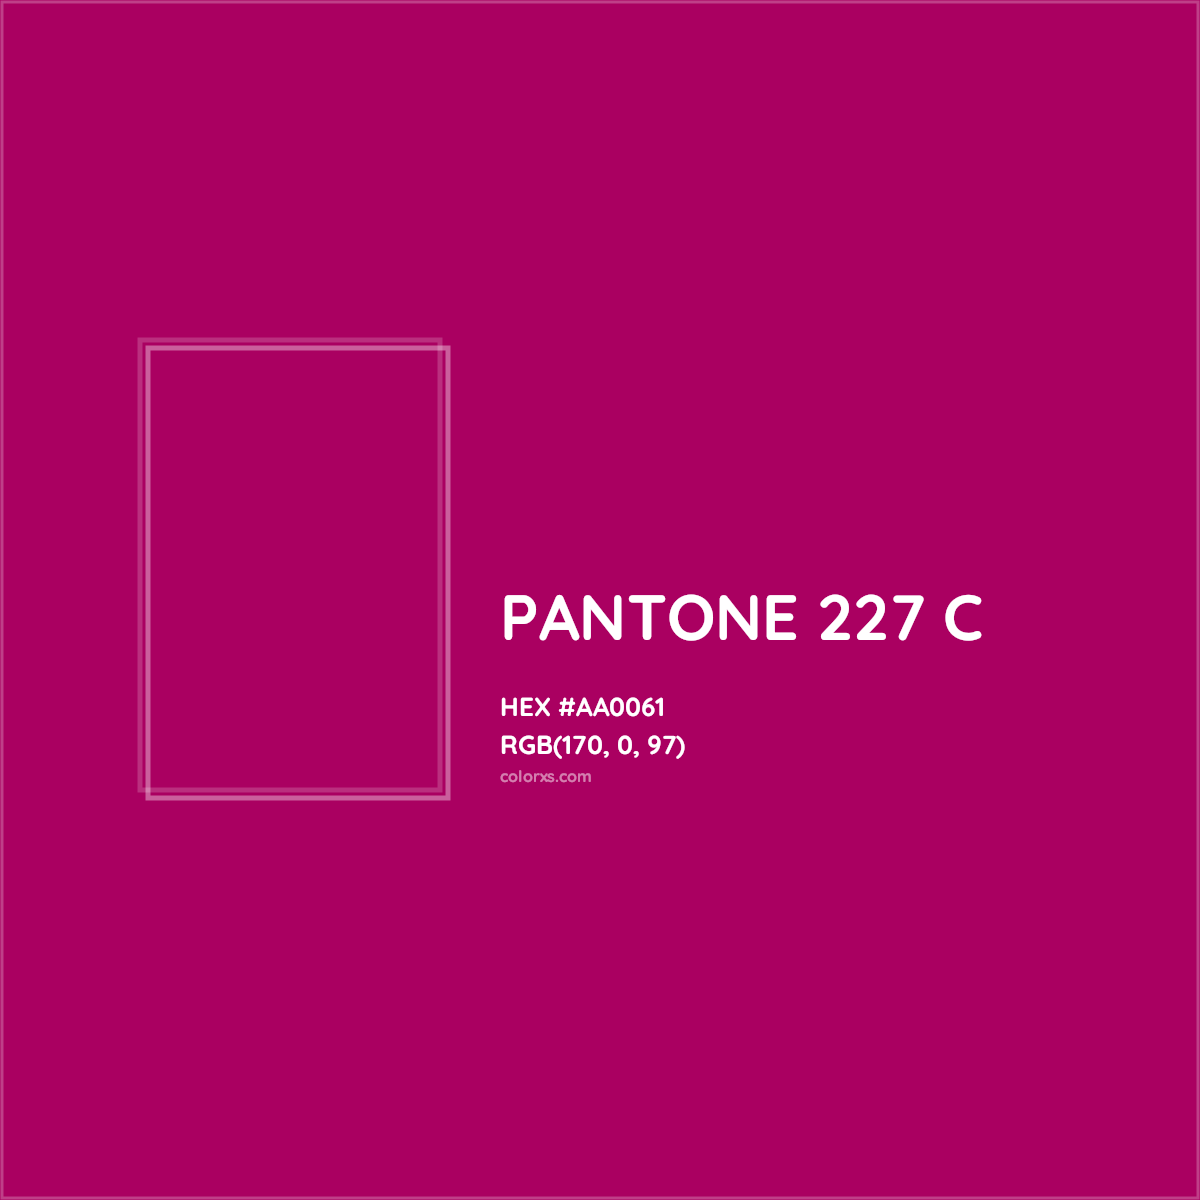 HEX #AA0061 PANTONE 227 C CMS Pantone PMS - Color Code